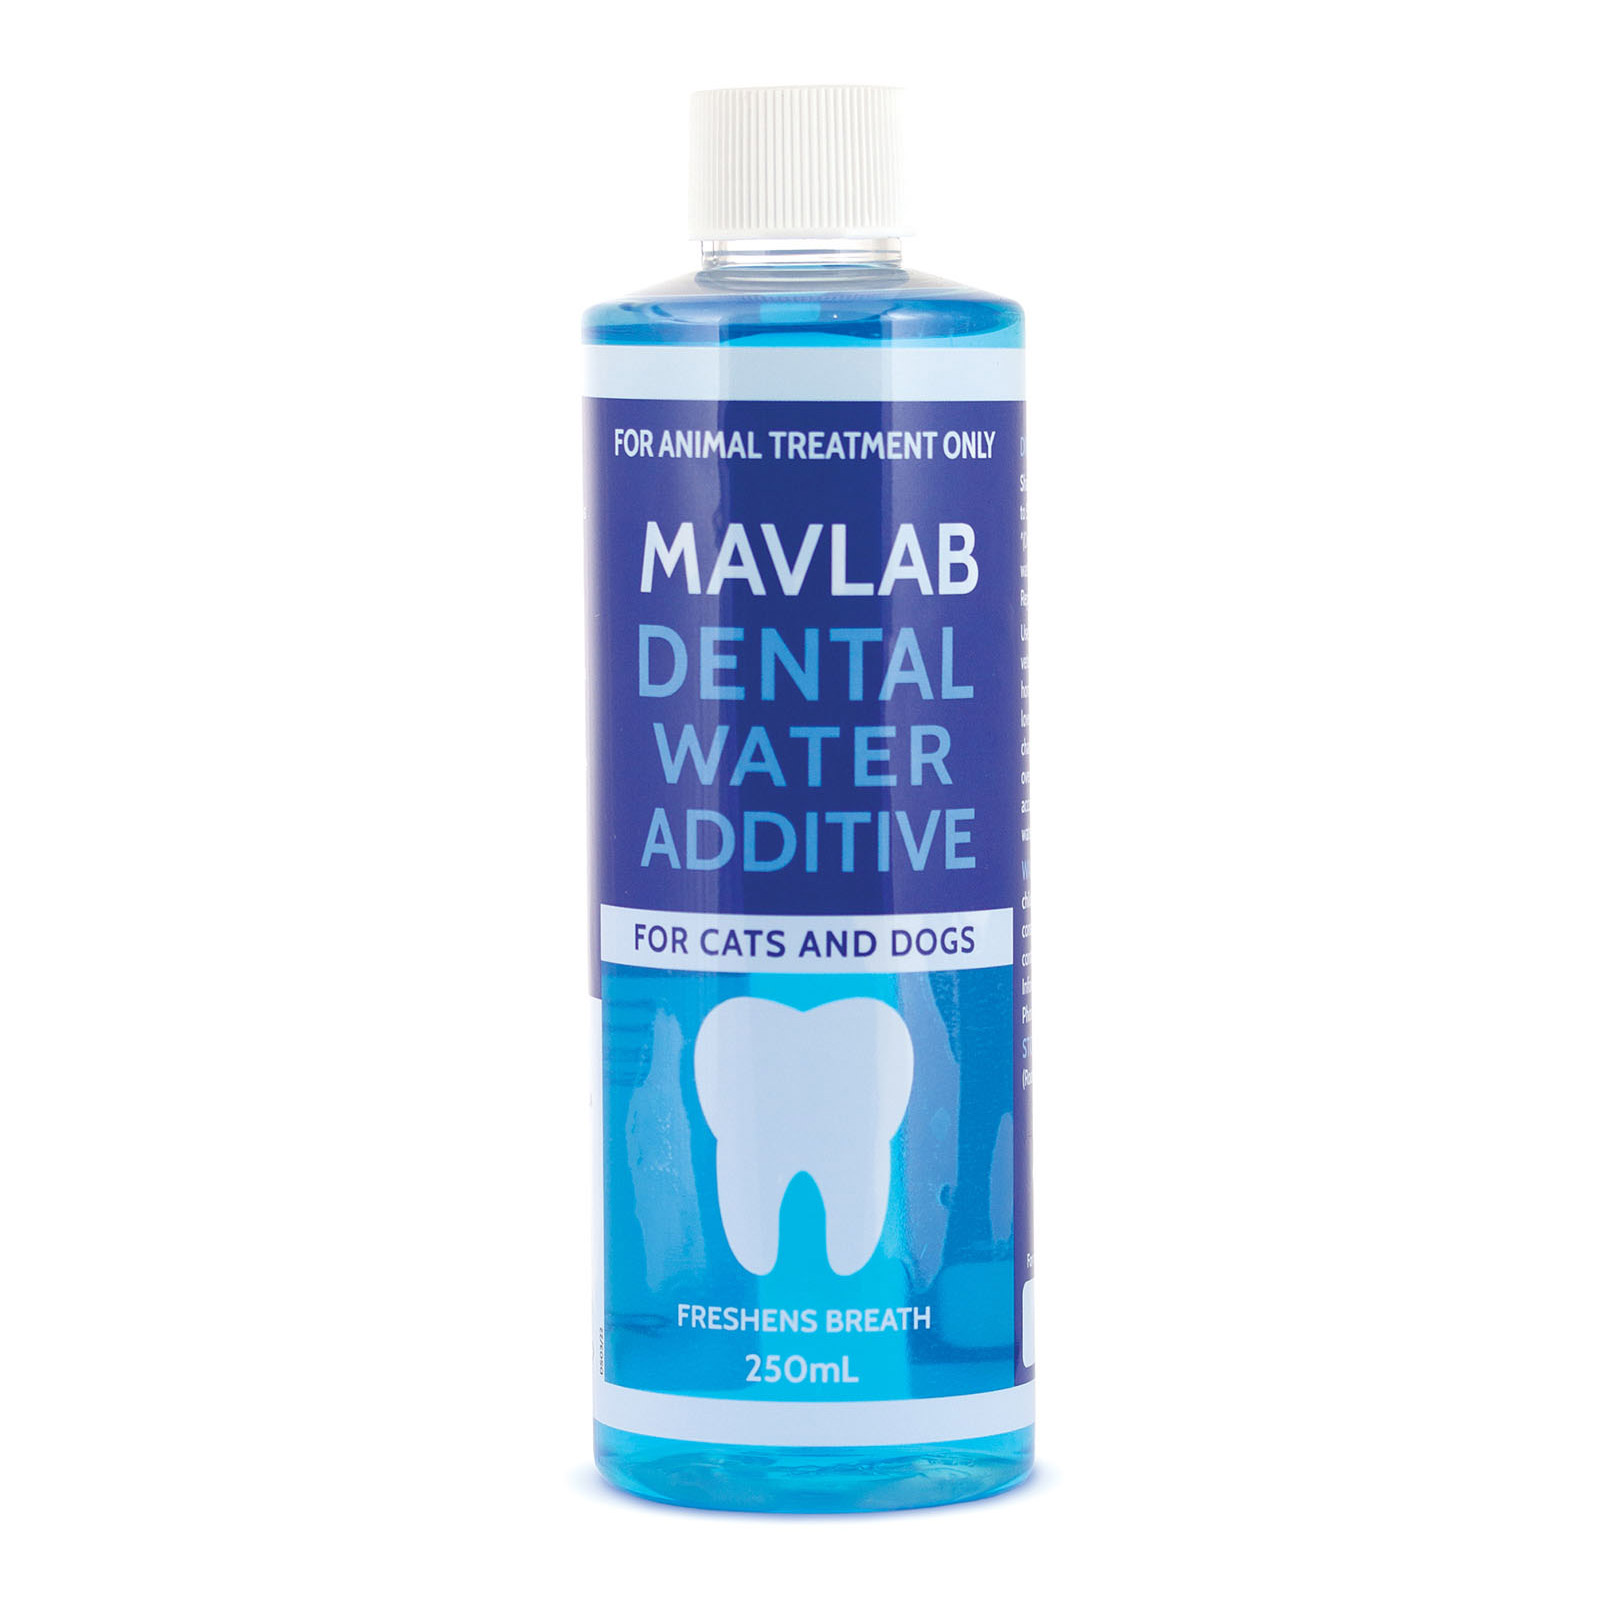 Mavlab Dental Water Additive for Dogs